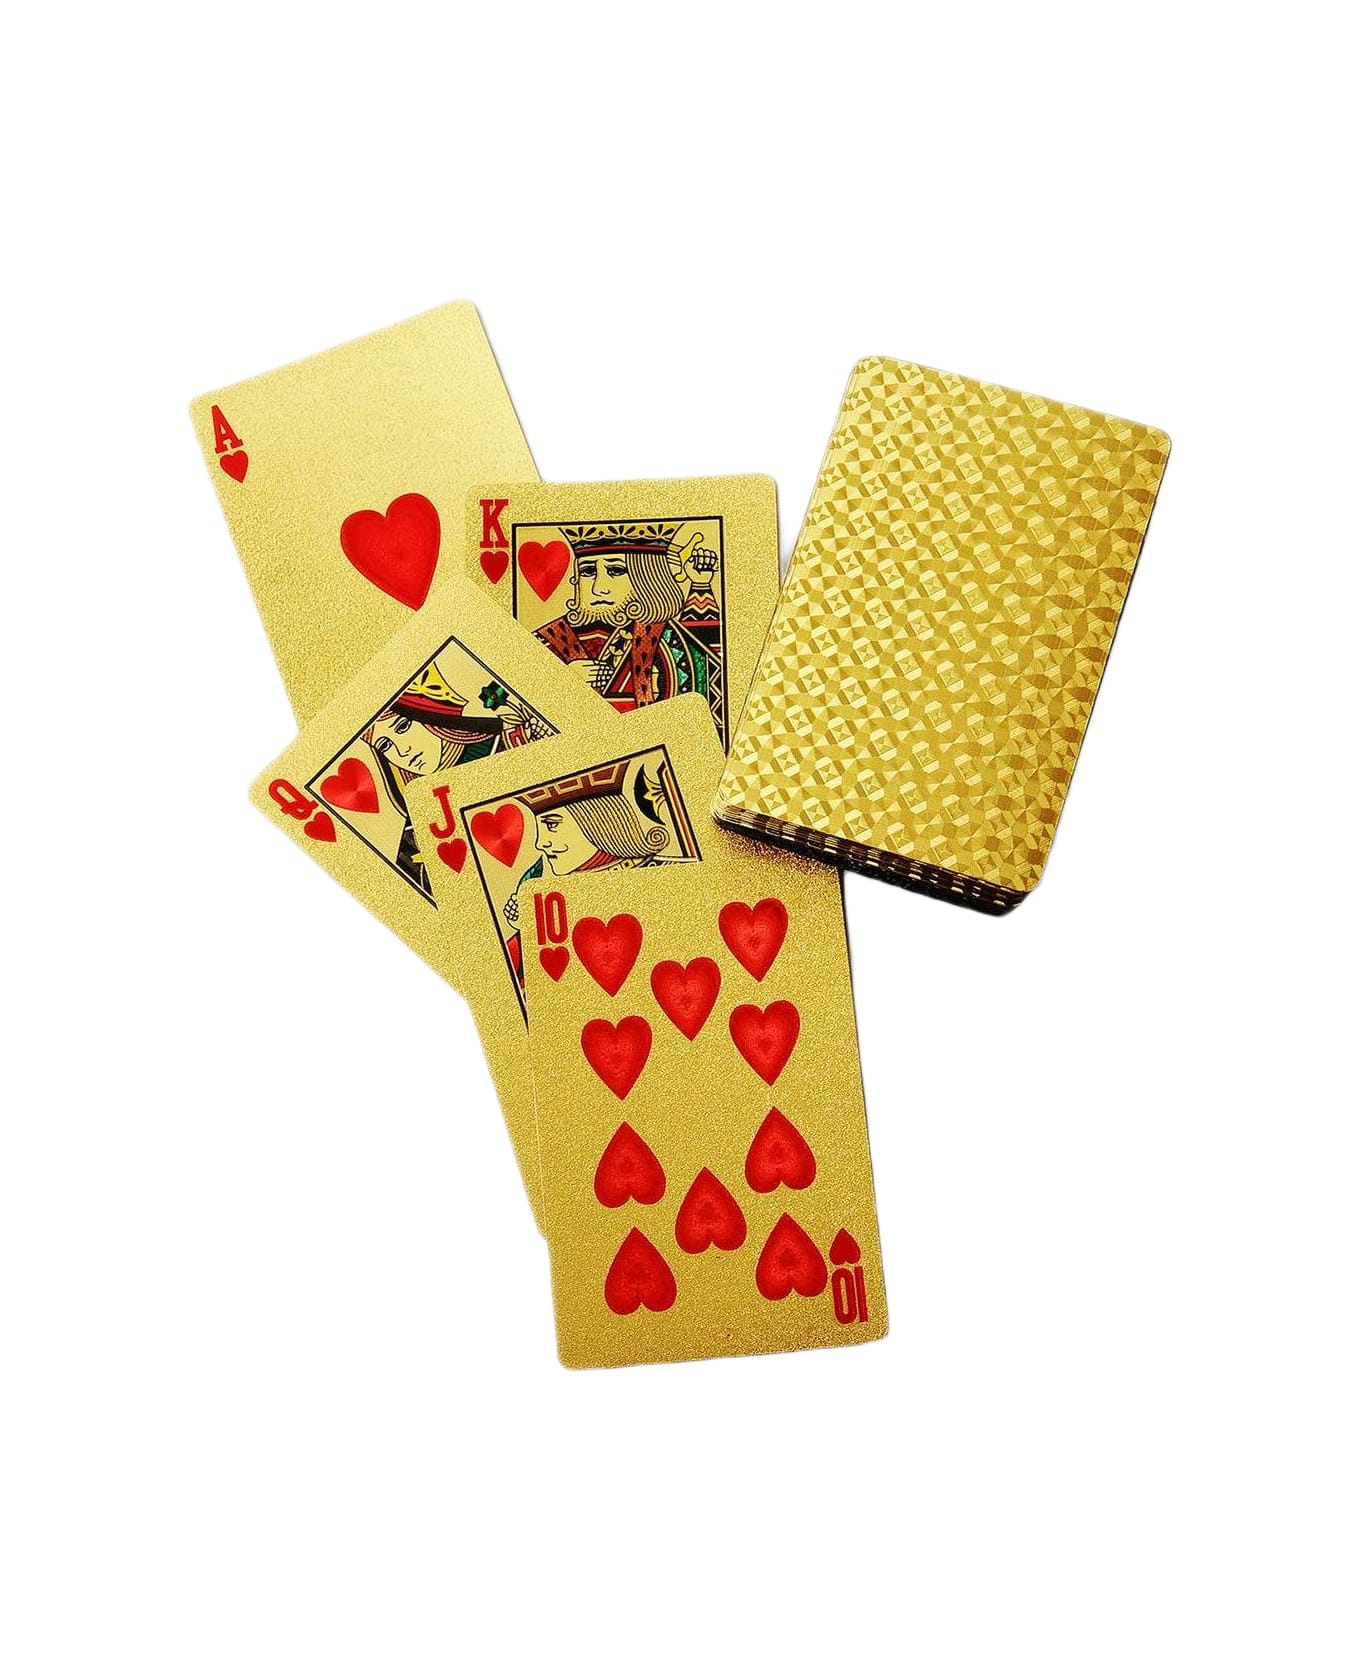 Larusmiani Playing Cards 'venezia' Game - Gold テーブルゲーム